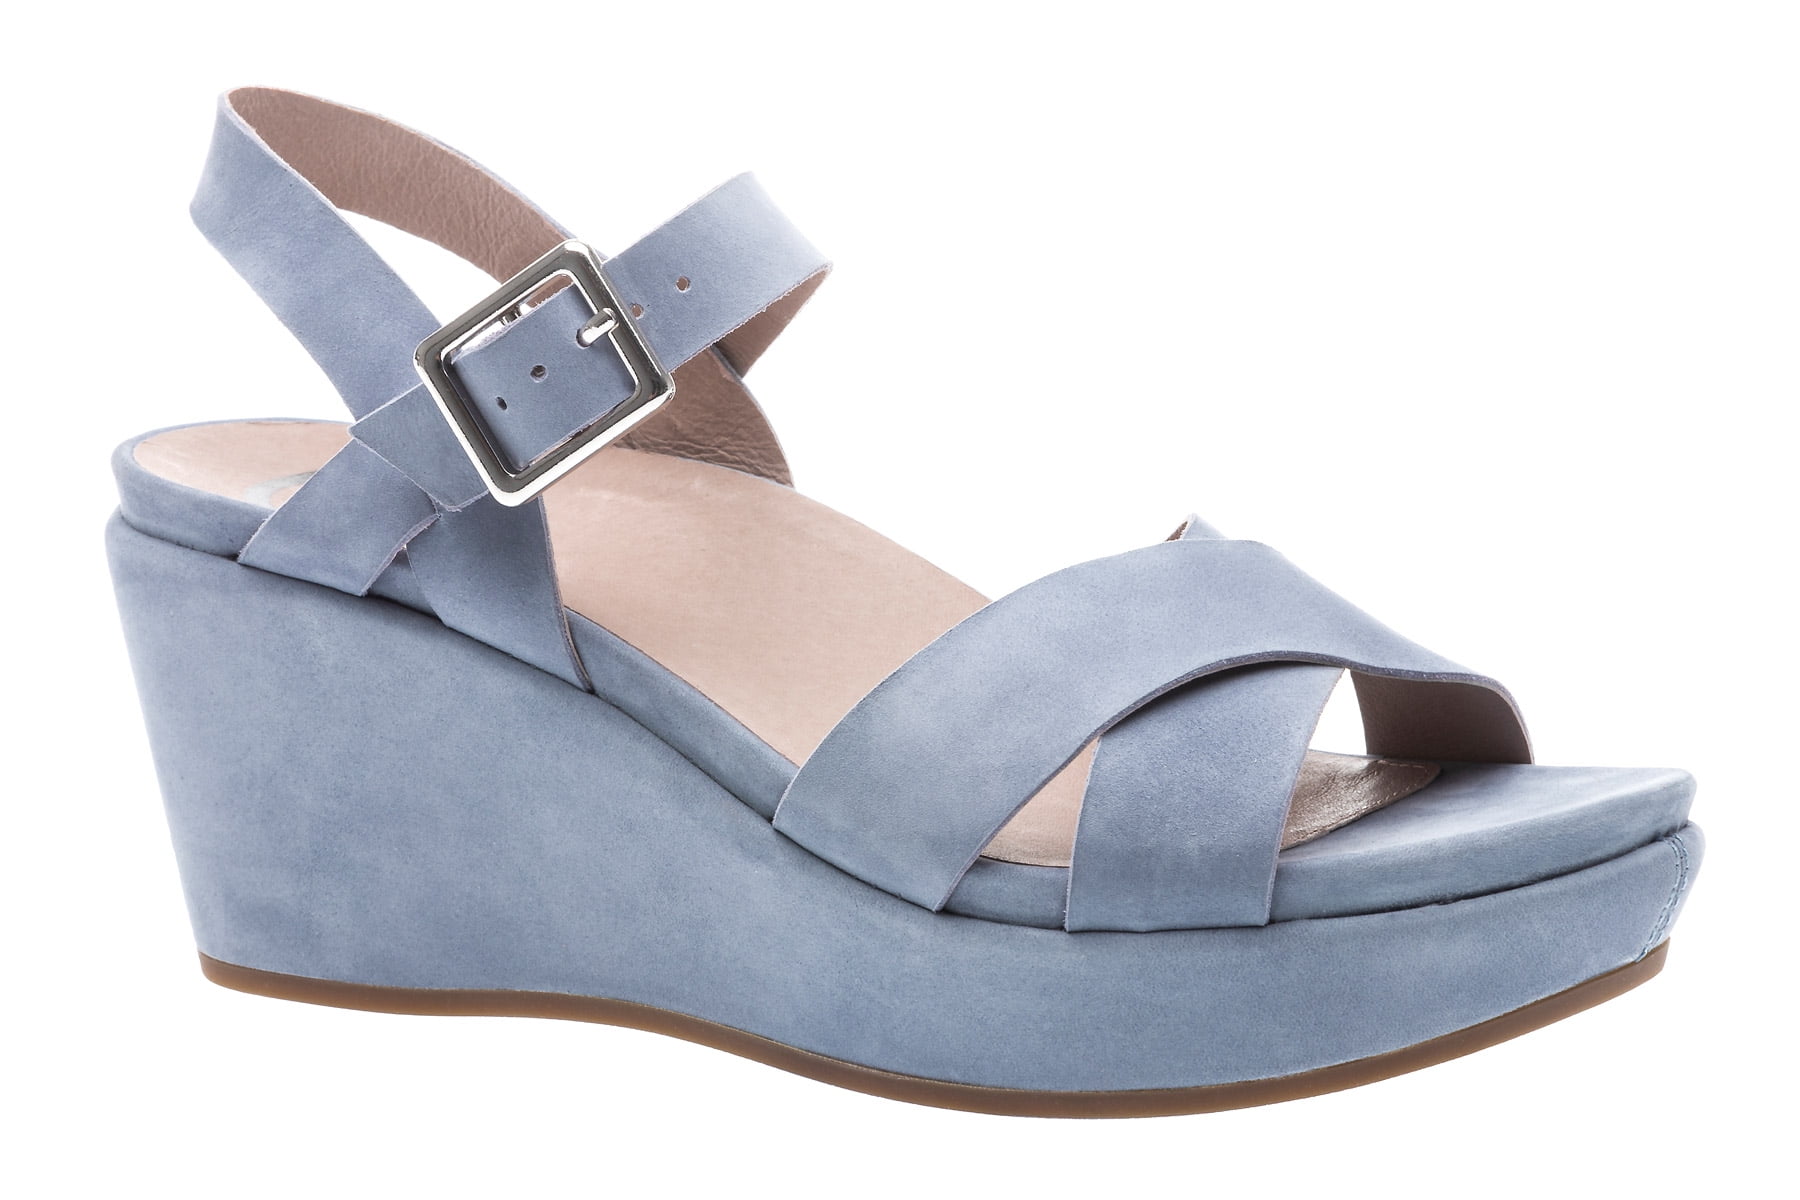 ABEO Hana Neutral - Wedge Sandals in Blue - Walmart.com